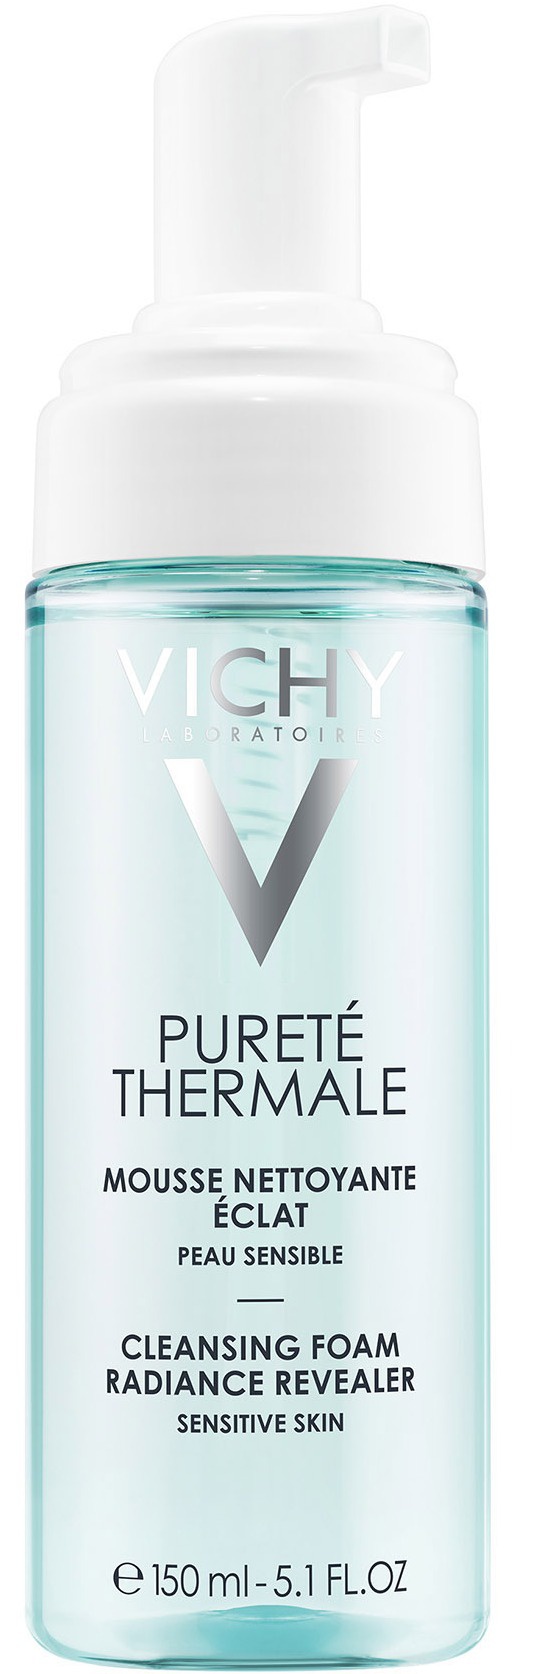 Vichy Pureté Thermale Cleansing Foam Radiance Revealer